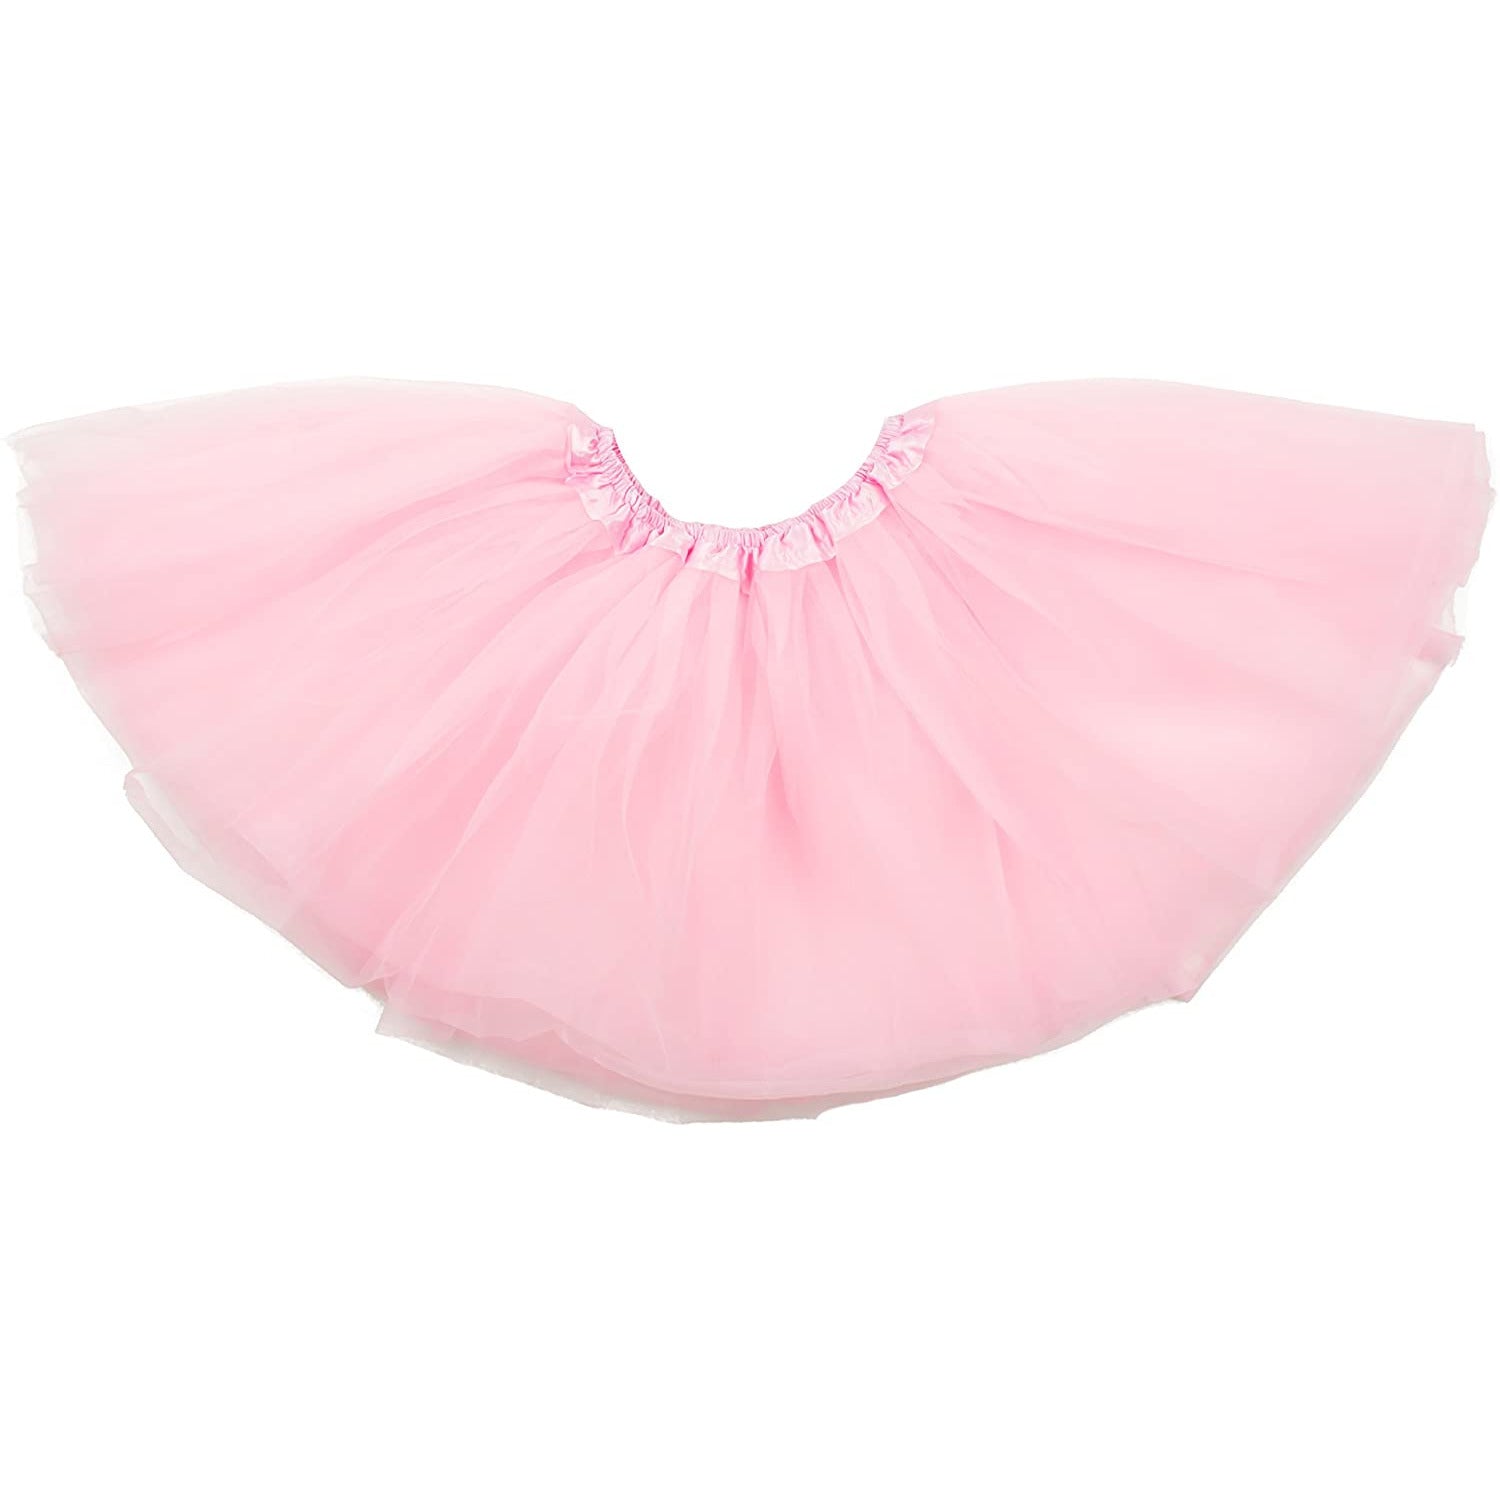 Dancina Tulle Skirt for Girls 2-12 years in Ballet Pink